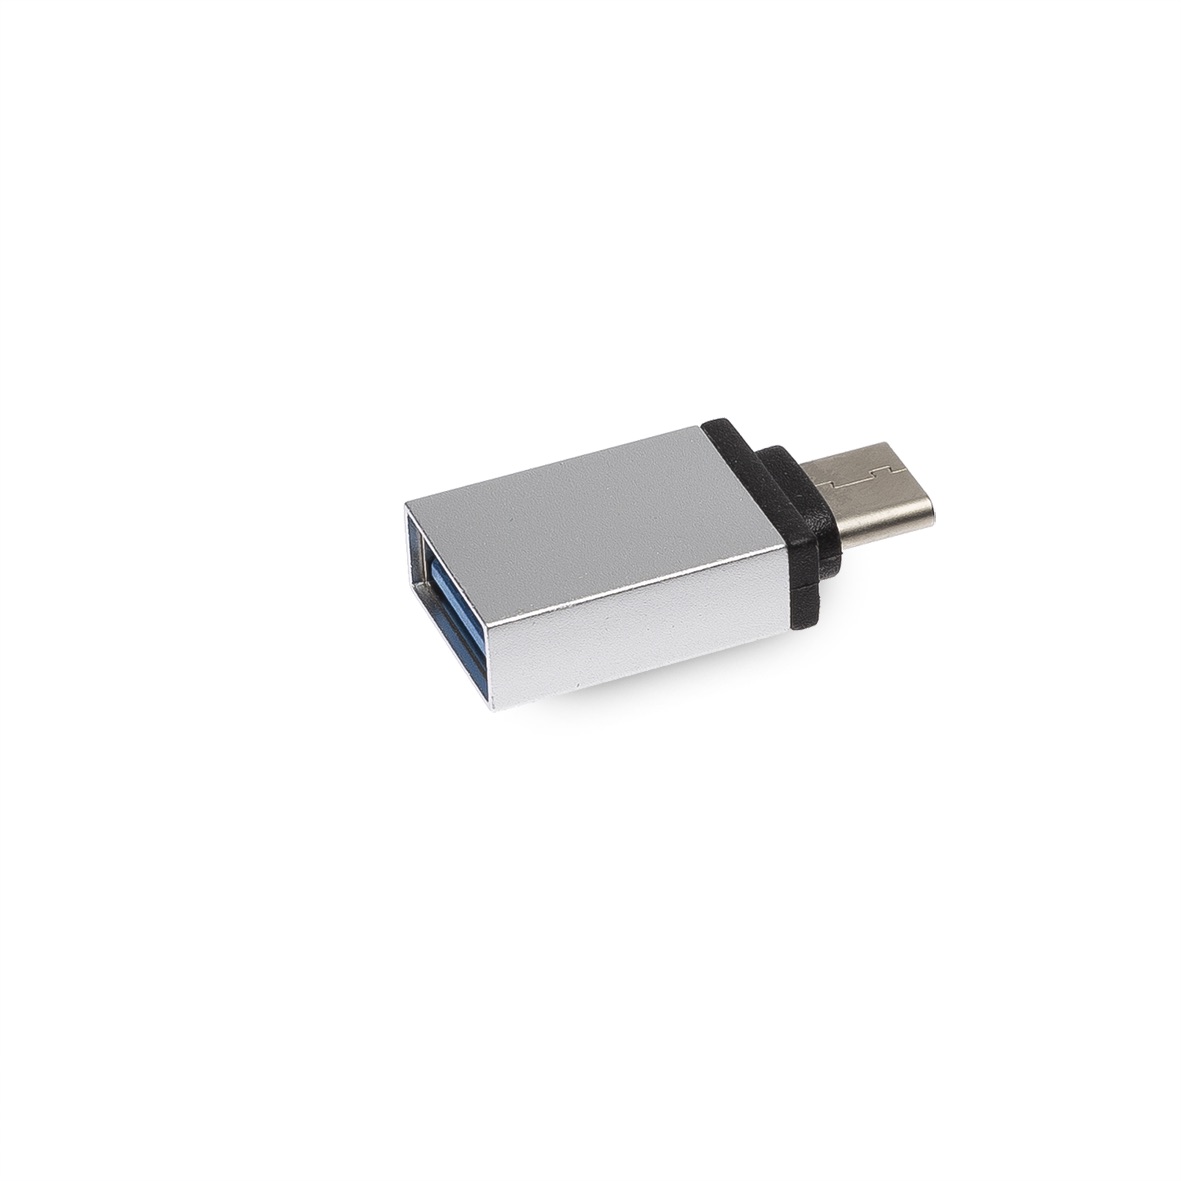 USB Stick "Adapter Sassi", inkl. Druck